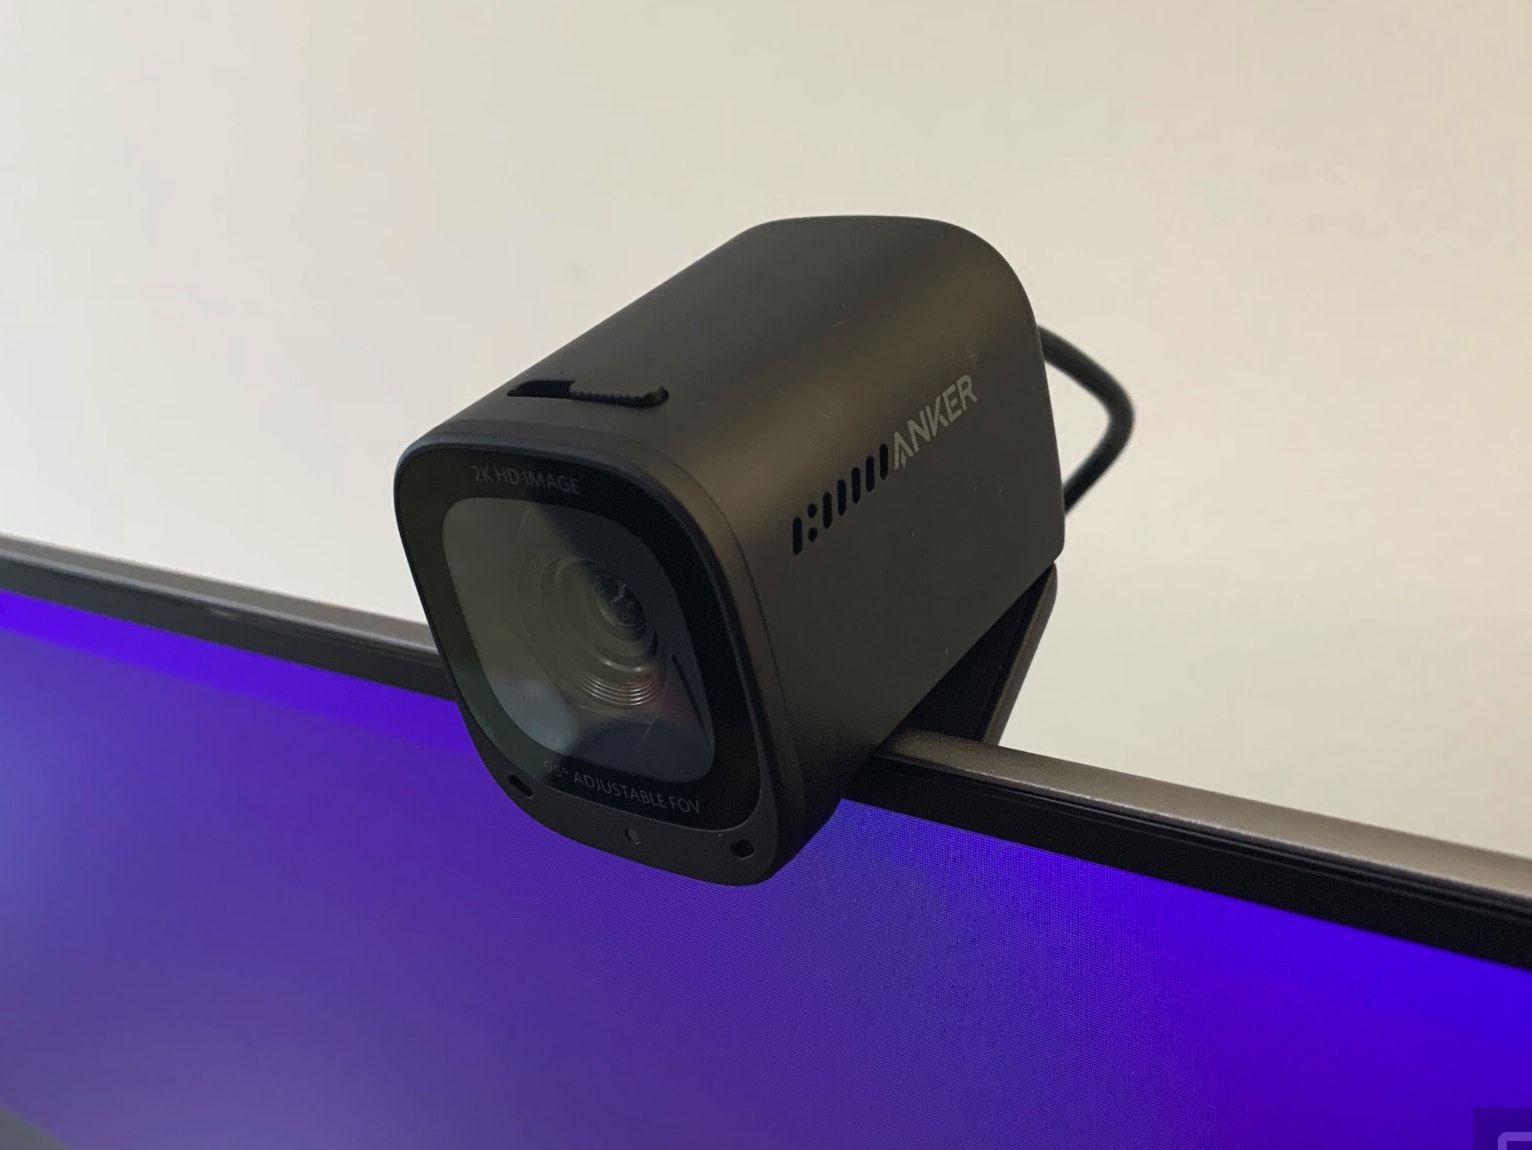 Anker PowerConf C200 2K Webcam